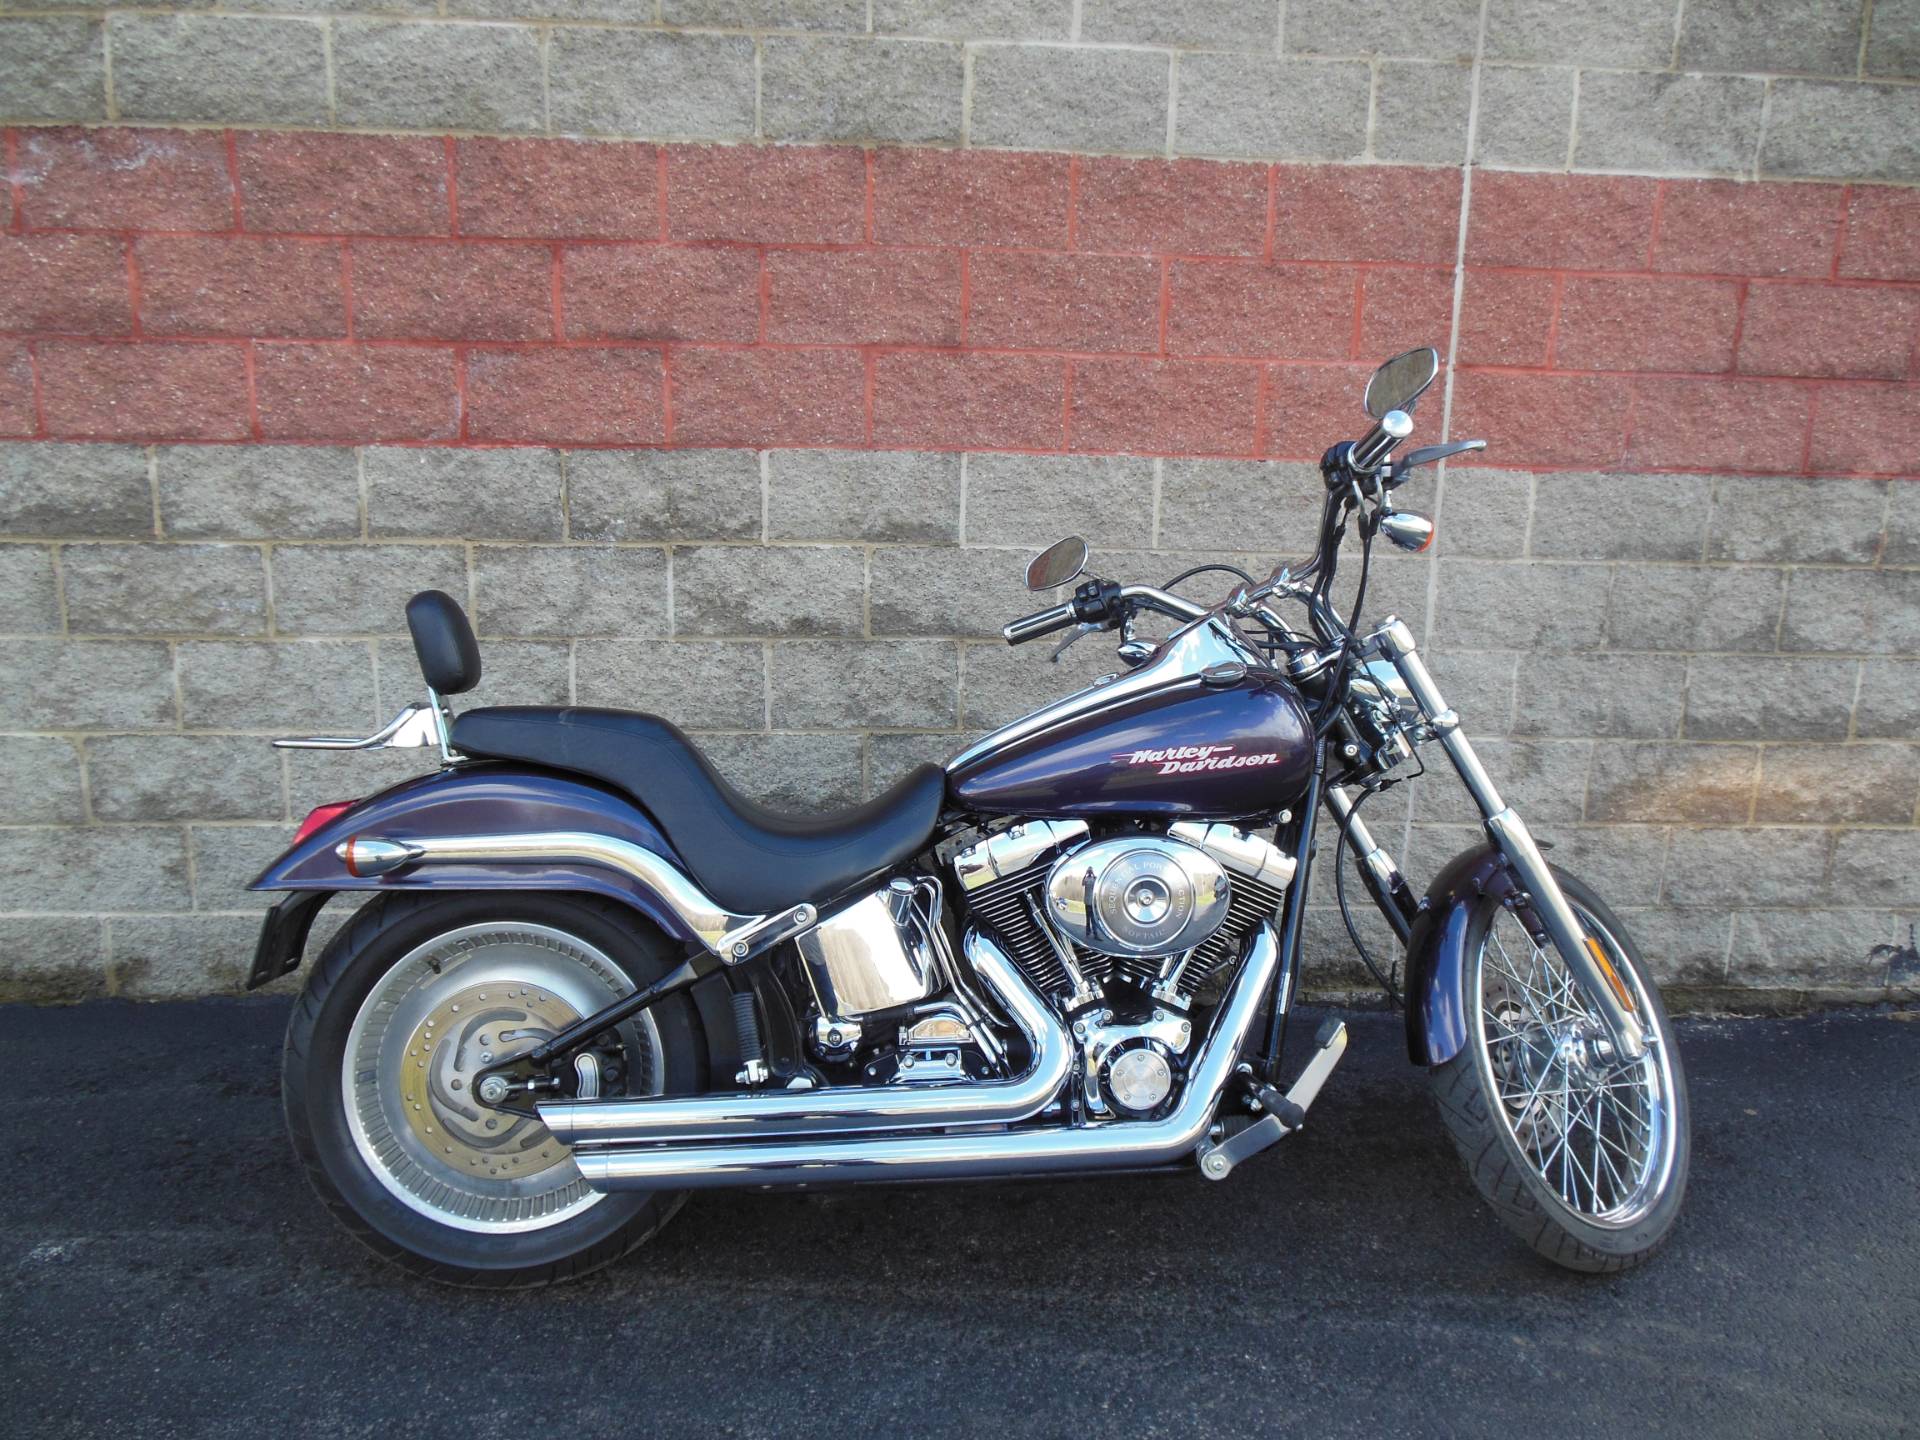 Used 2004 Harley Davidson Fxstd Fxstdi Softail Deuce Purple Motorcycles In Galeton Pa 046103